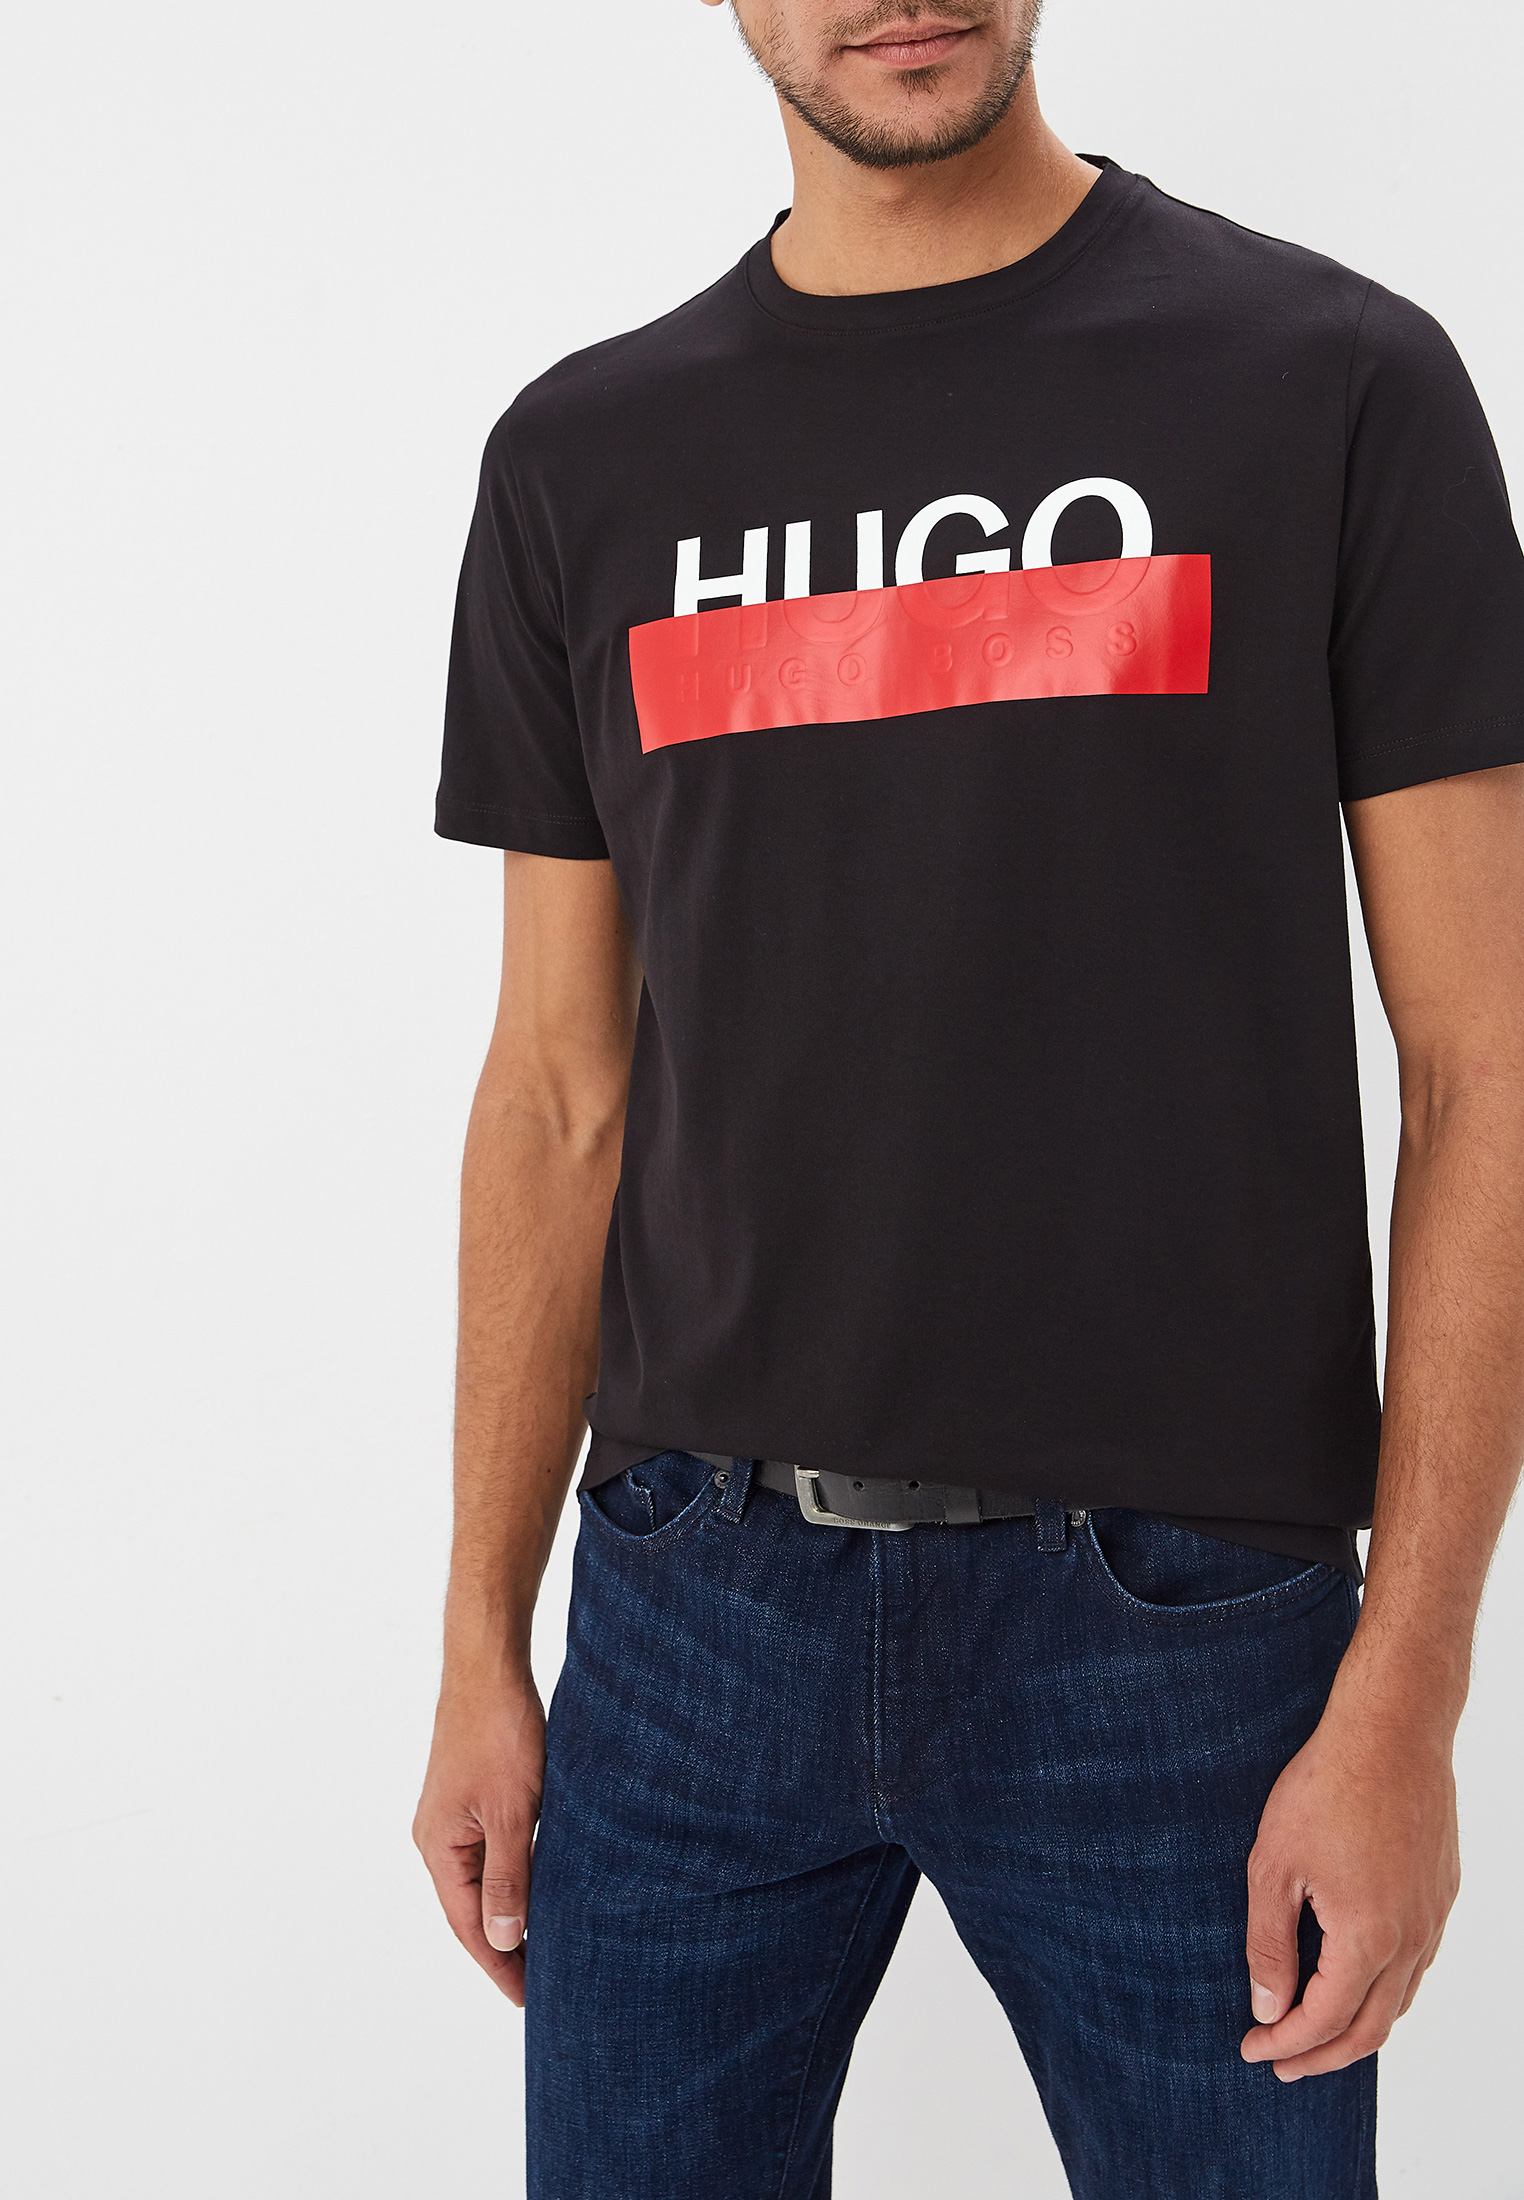 Футболки хуго босс. Футболка Hugo Hugo Boss черная. Майка Хуго босс черная. Футболка Boss Hugo Boss. Футболка Hugo Boss 2022.